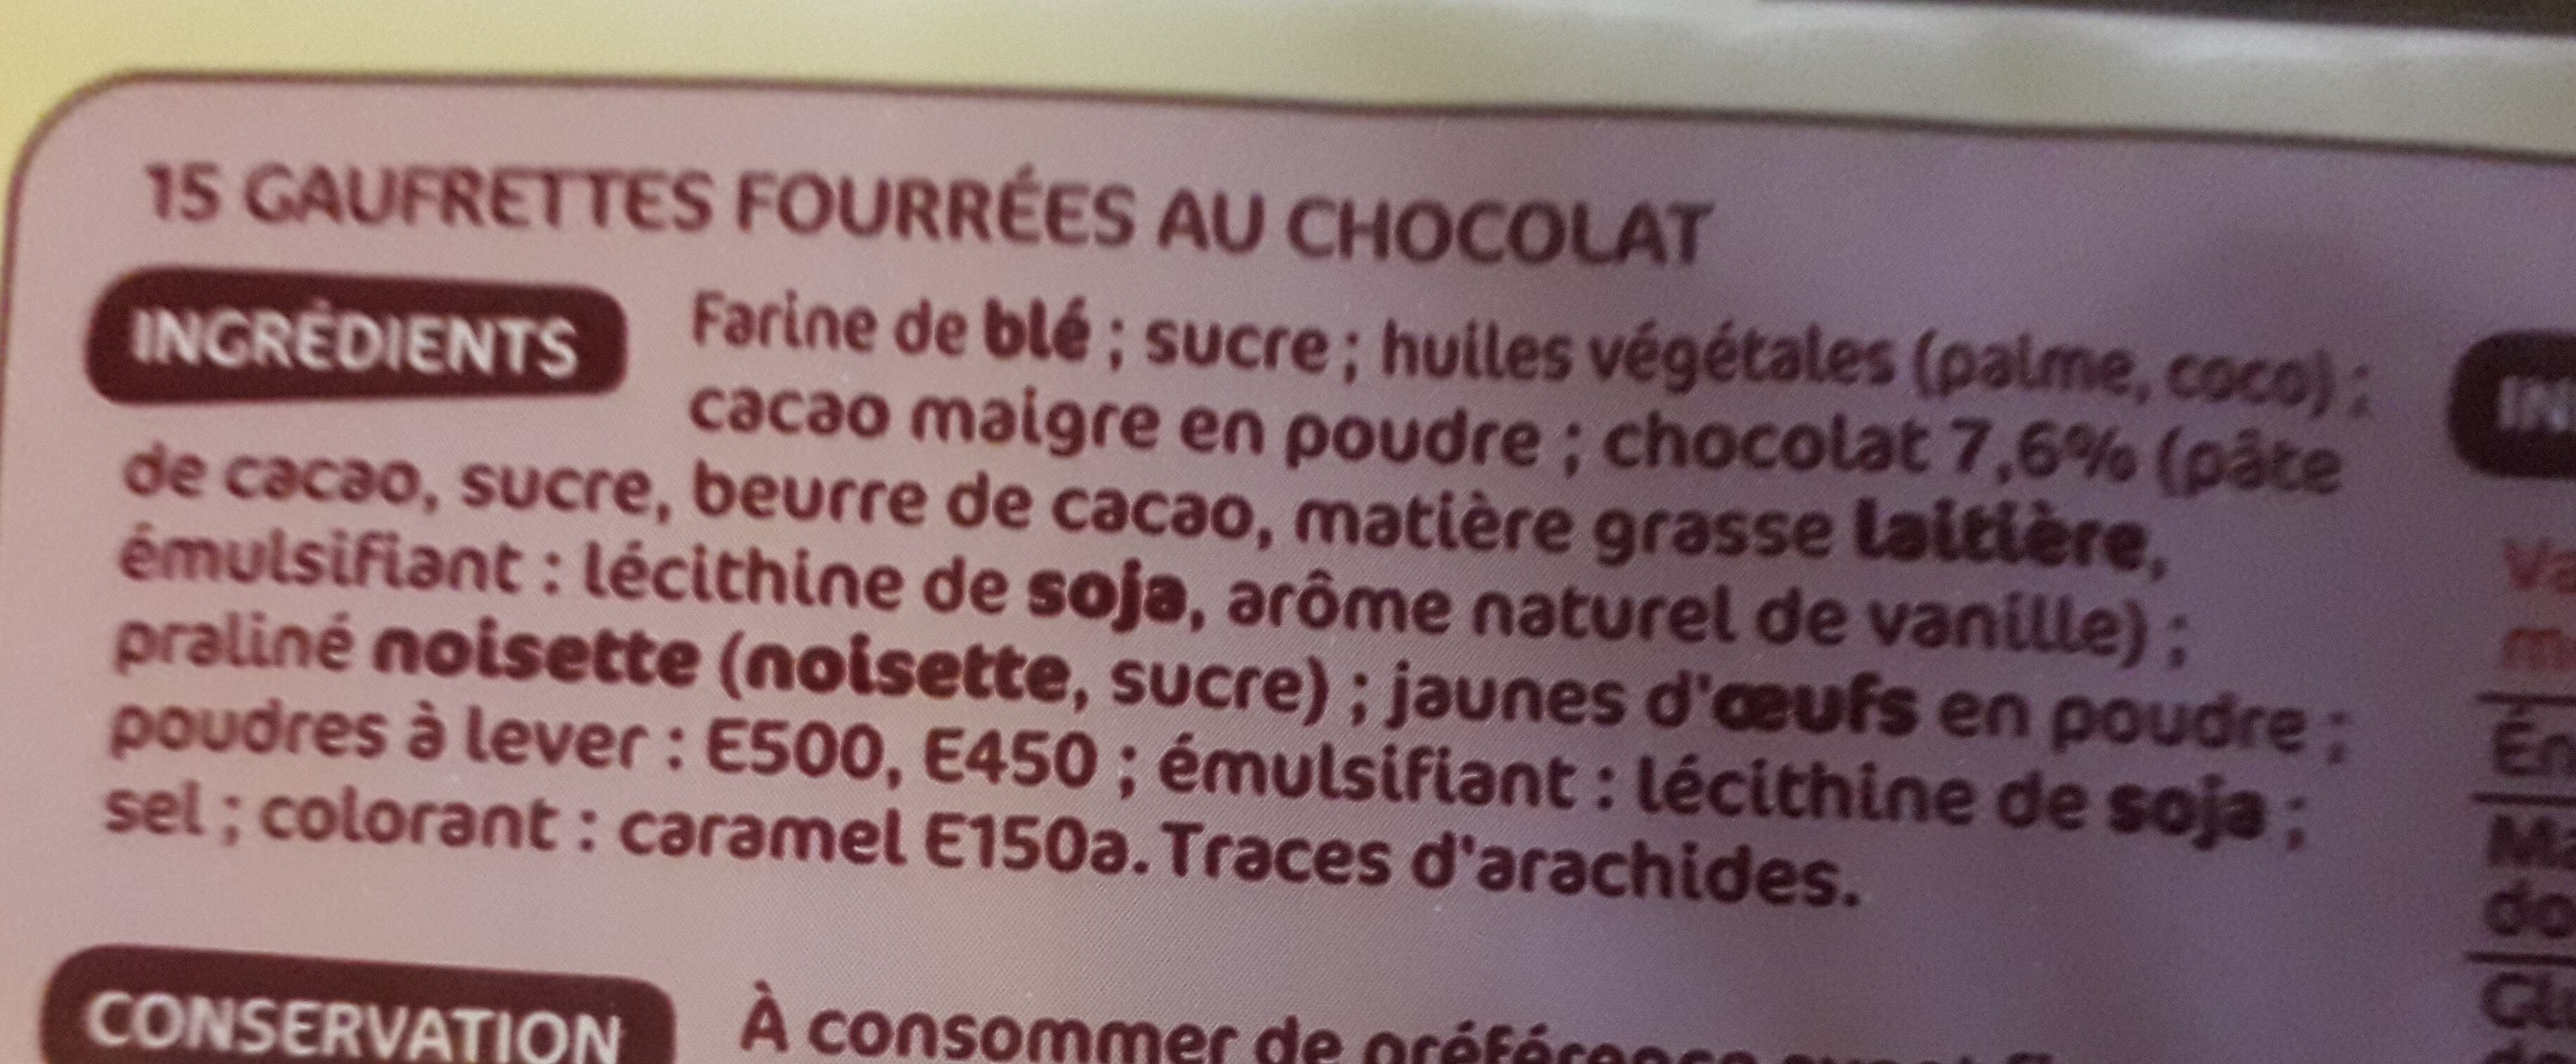 Gaufrettes chocolat x15 - Ingredients - fr